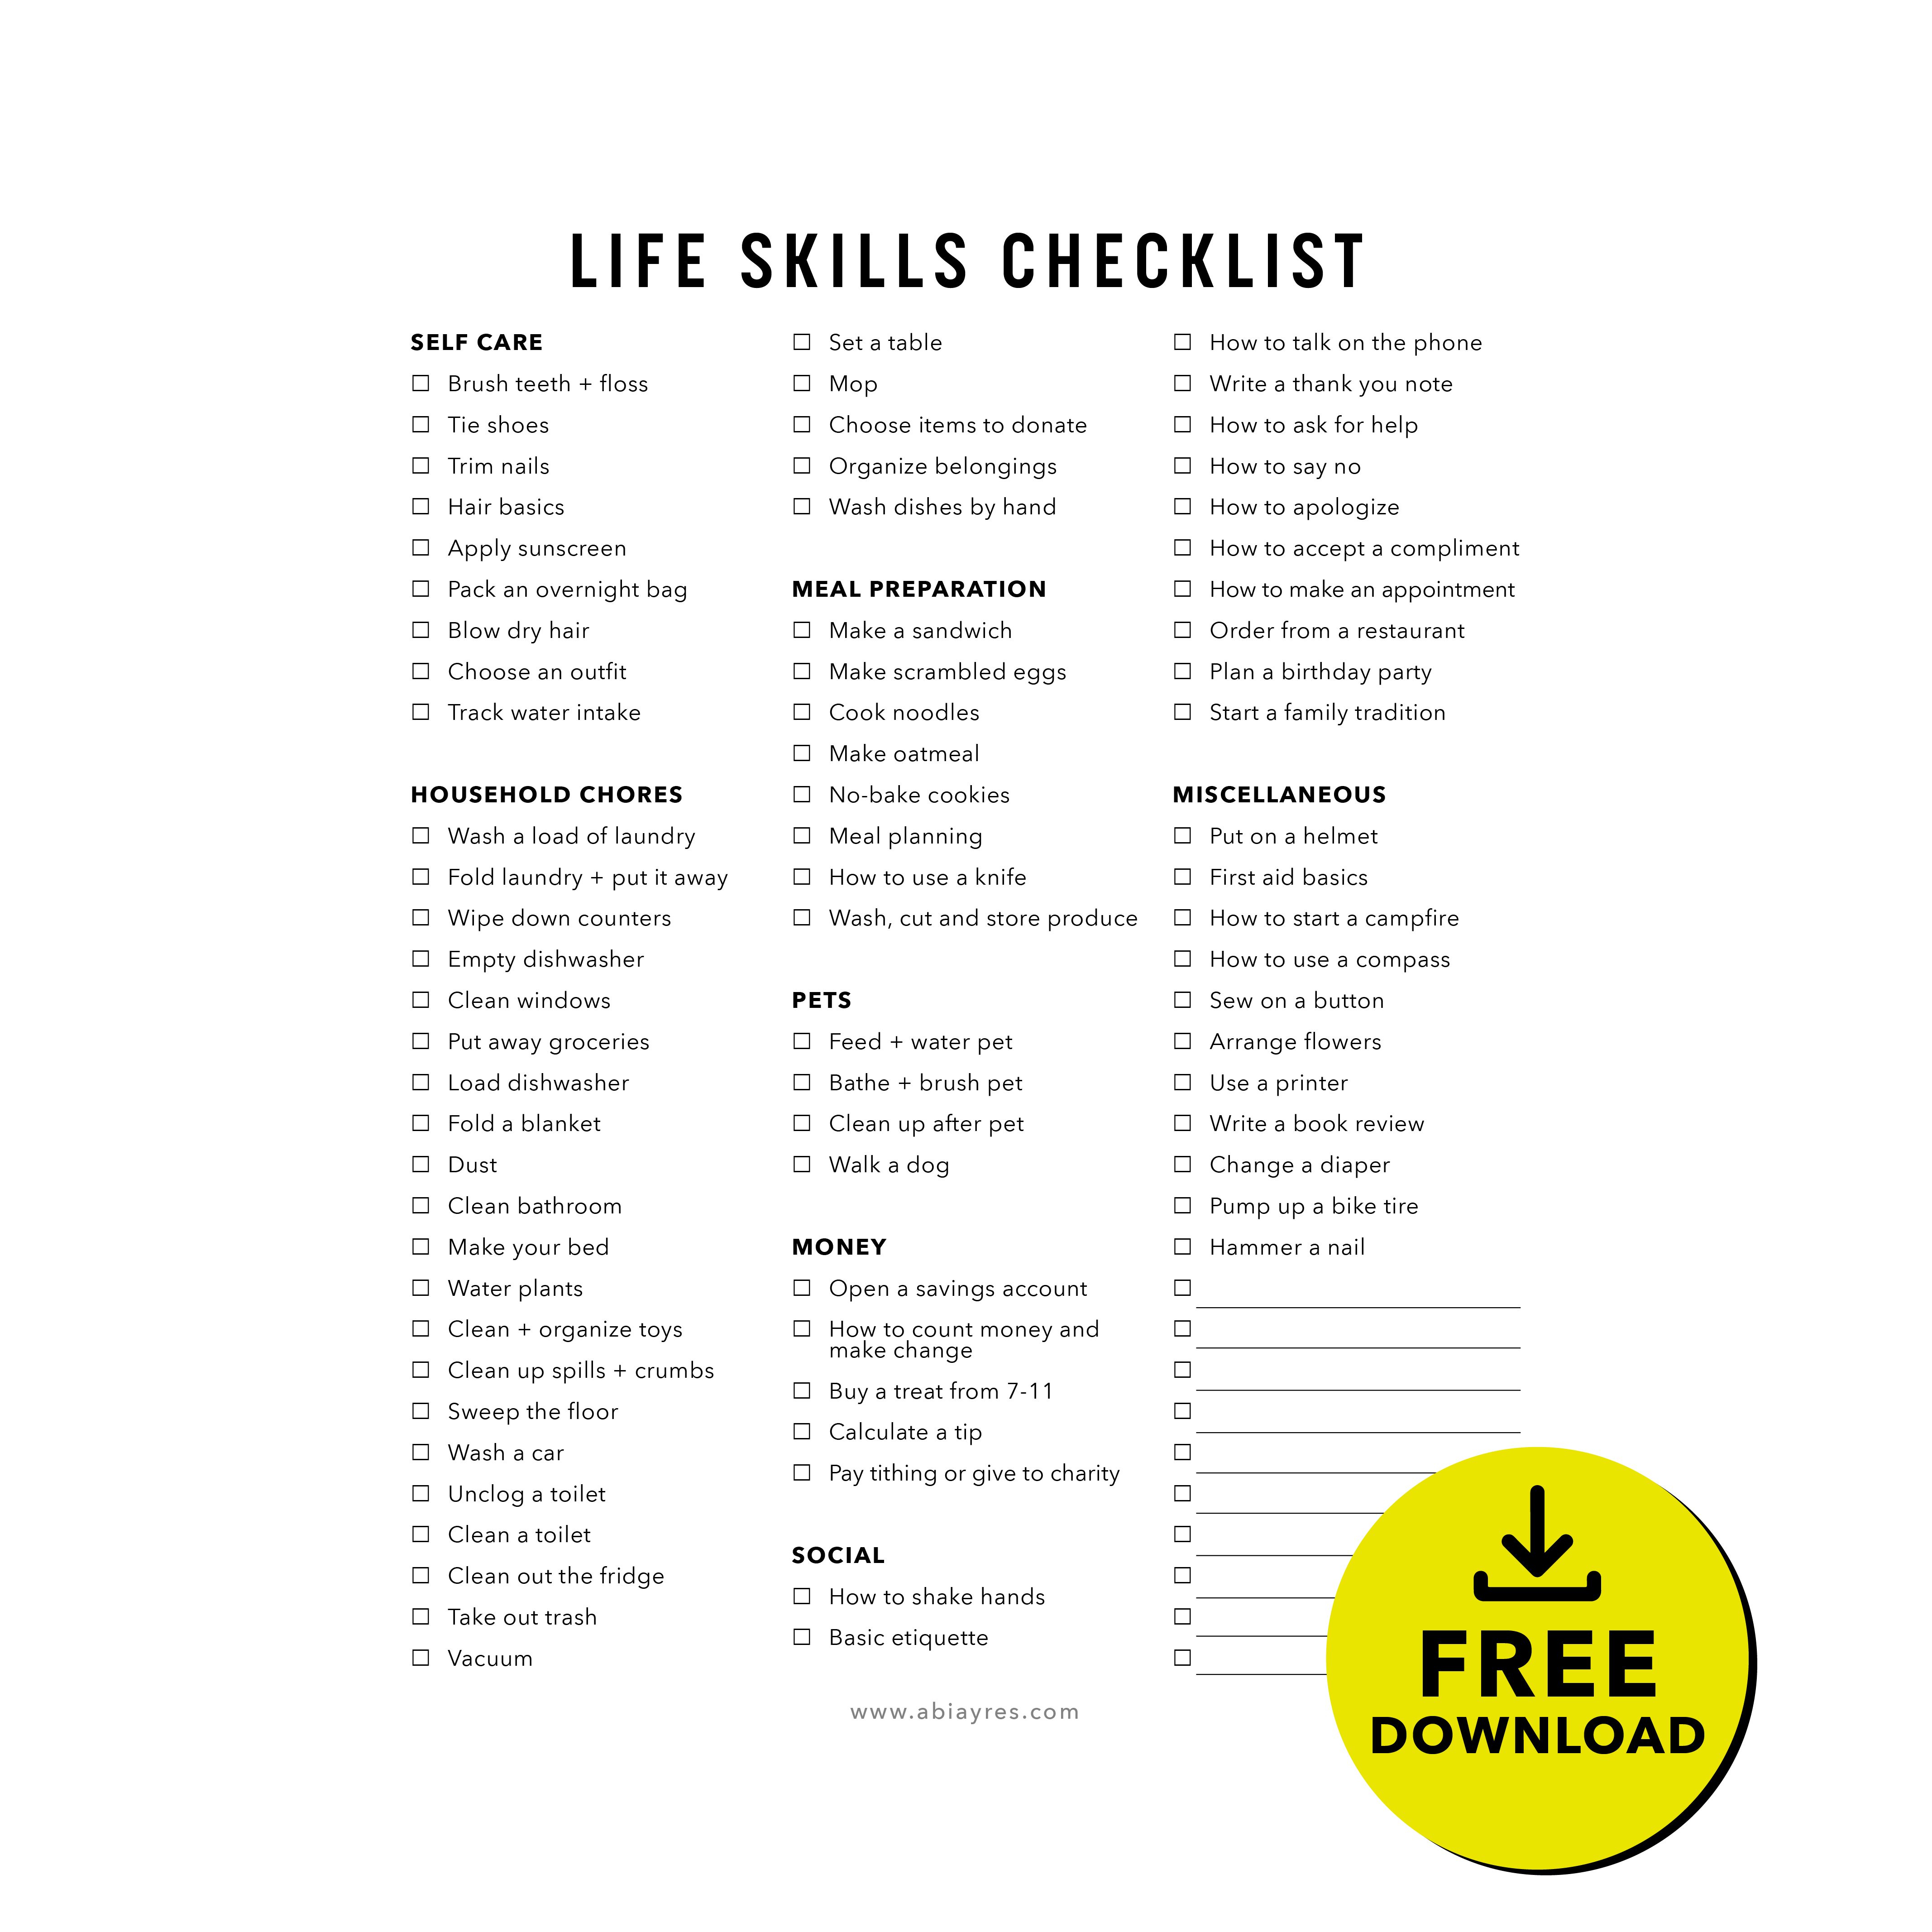 Life Skills Checklist for Kids